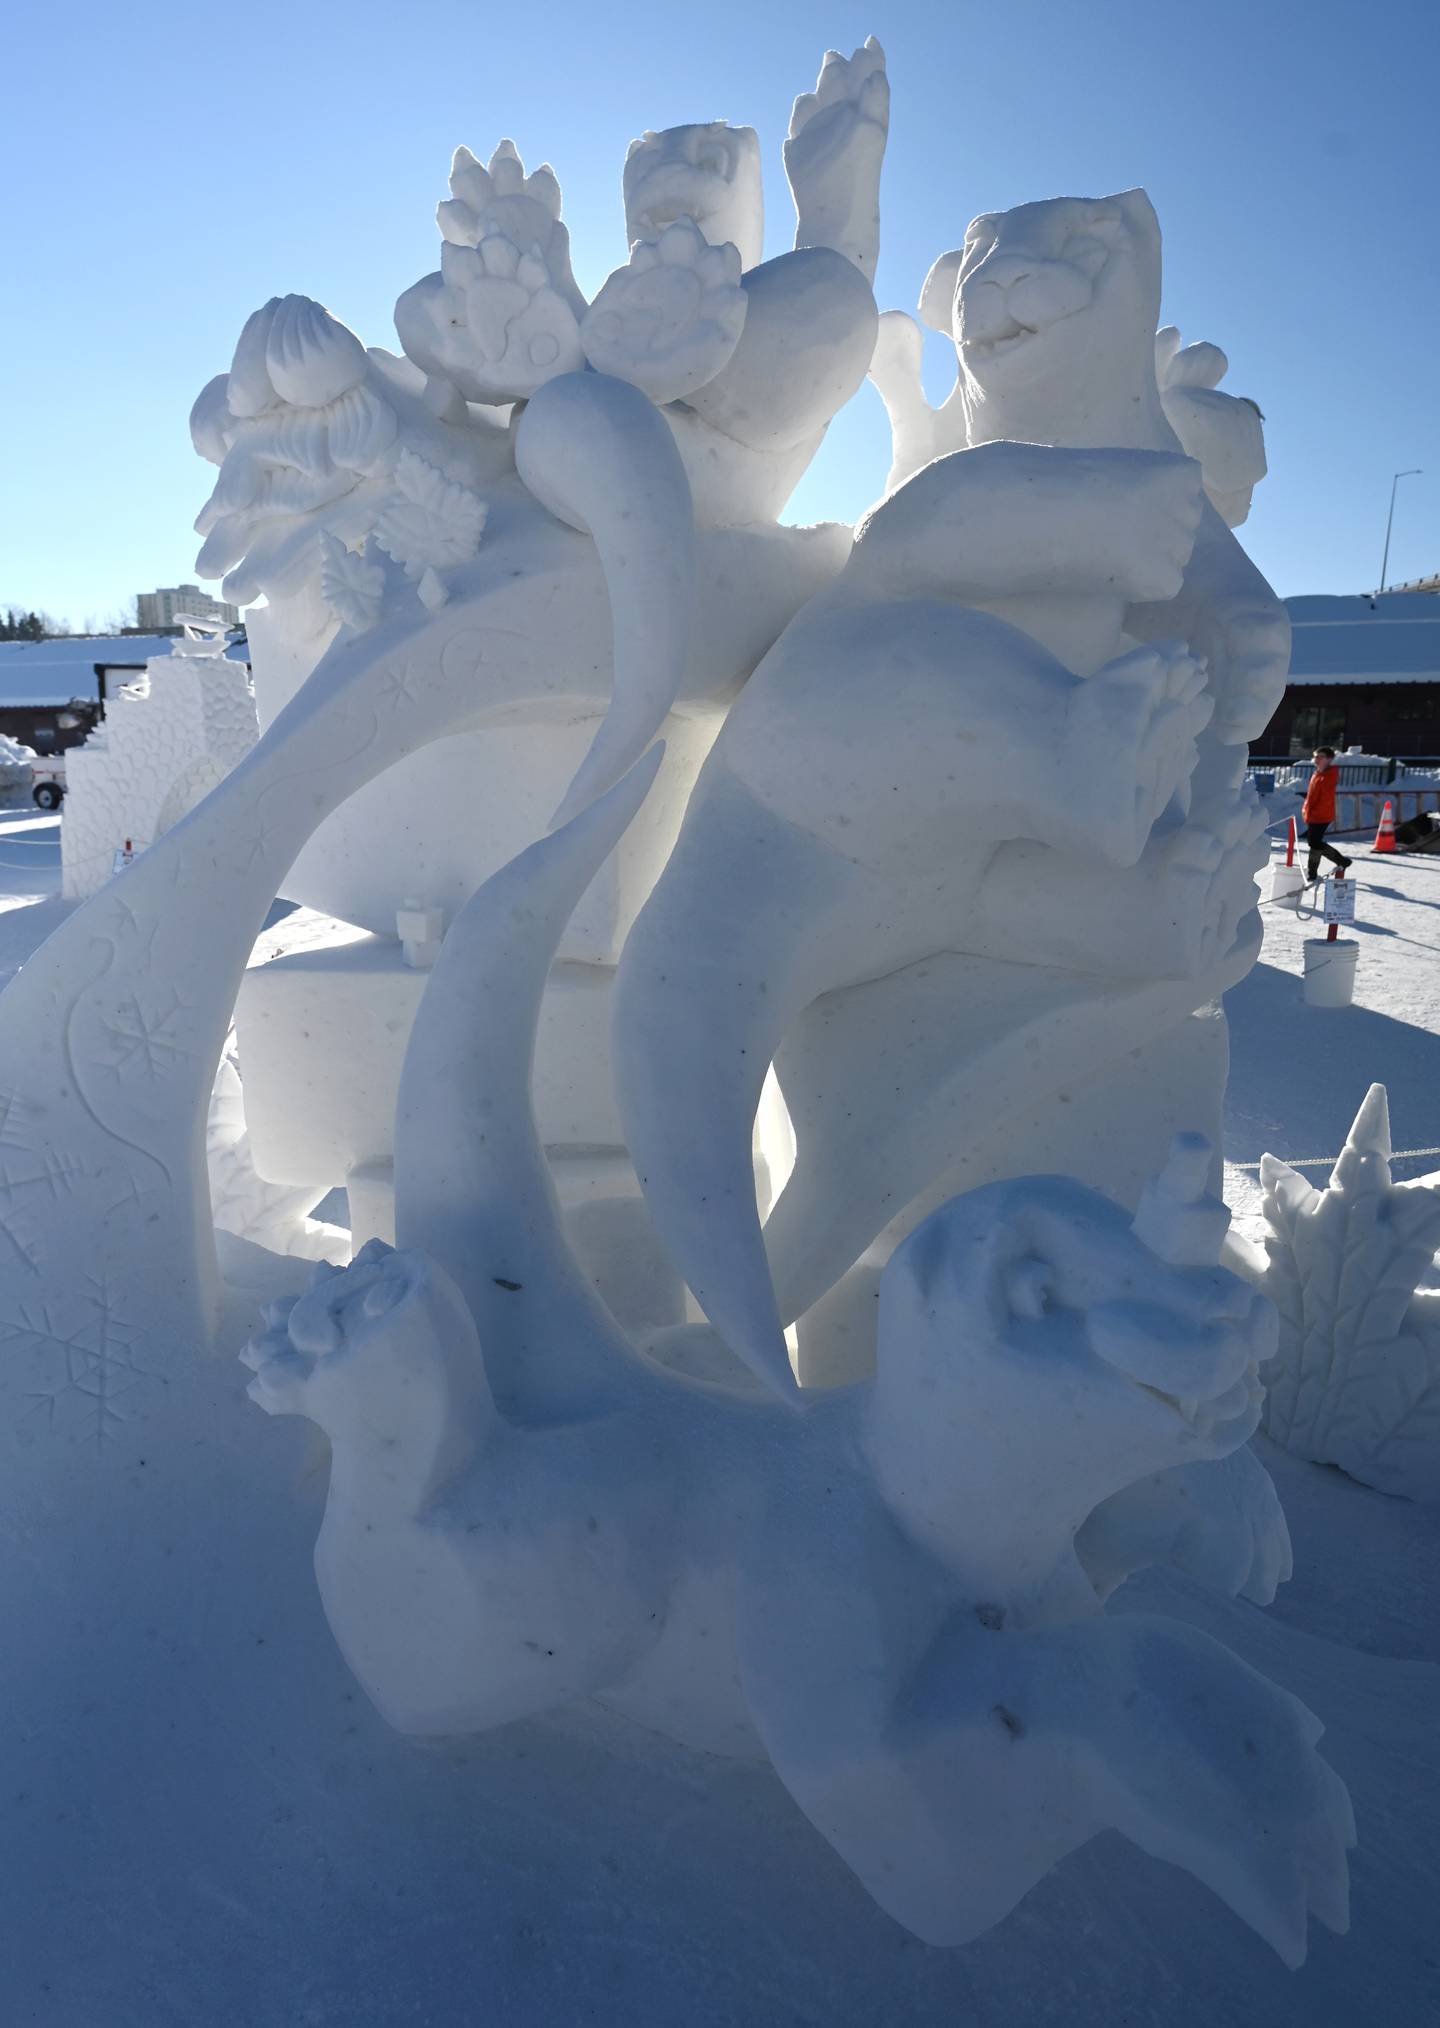 Fur Rondy snow sculptures